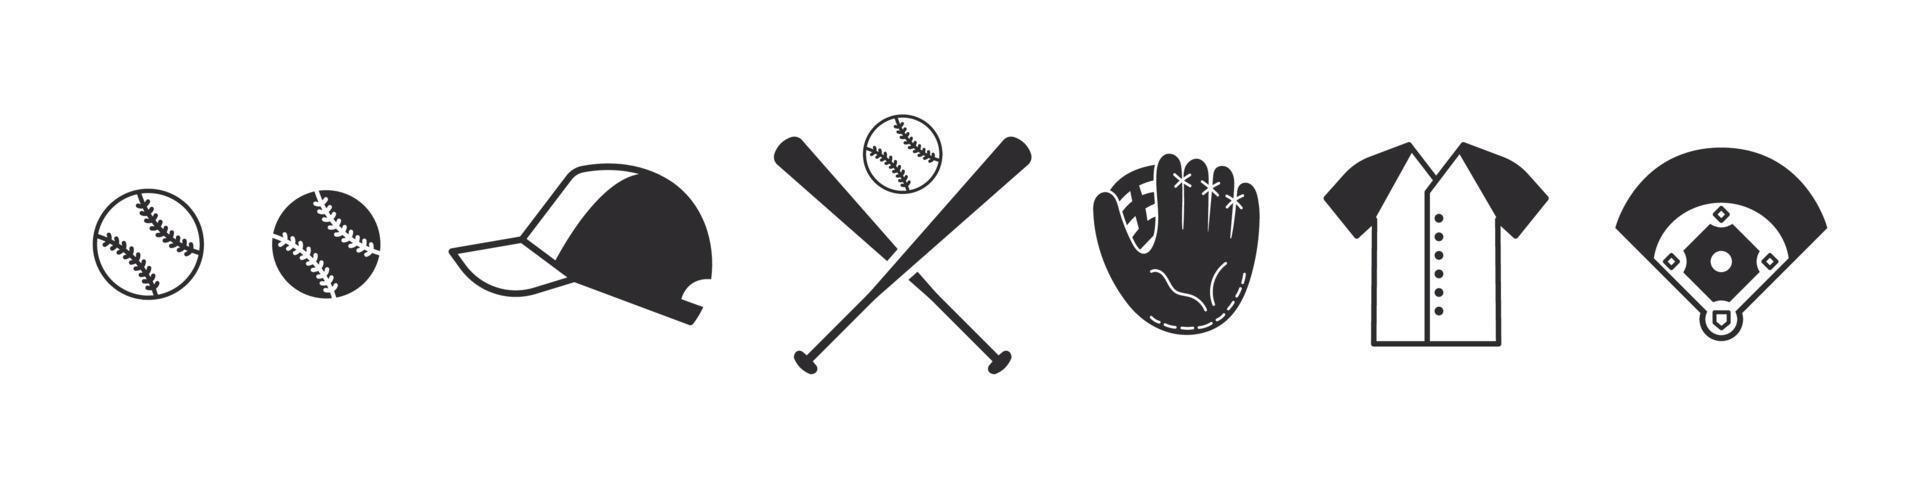 Baseball icons set. Baseball signs. Baseball elements for design. Vector icons